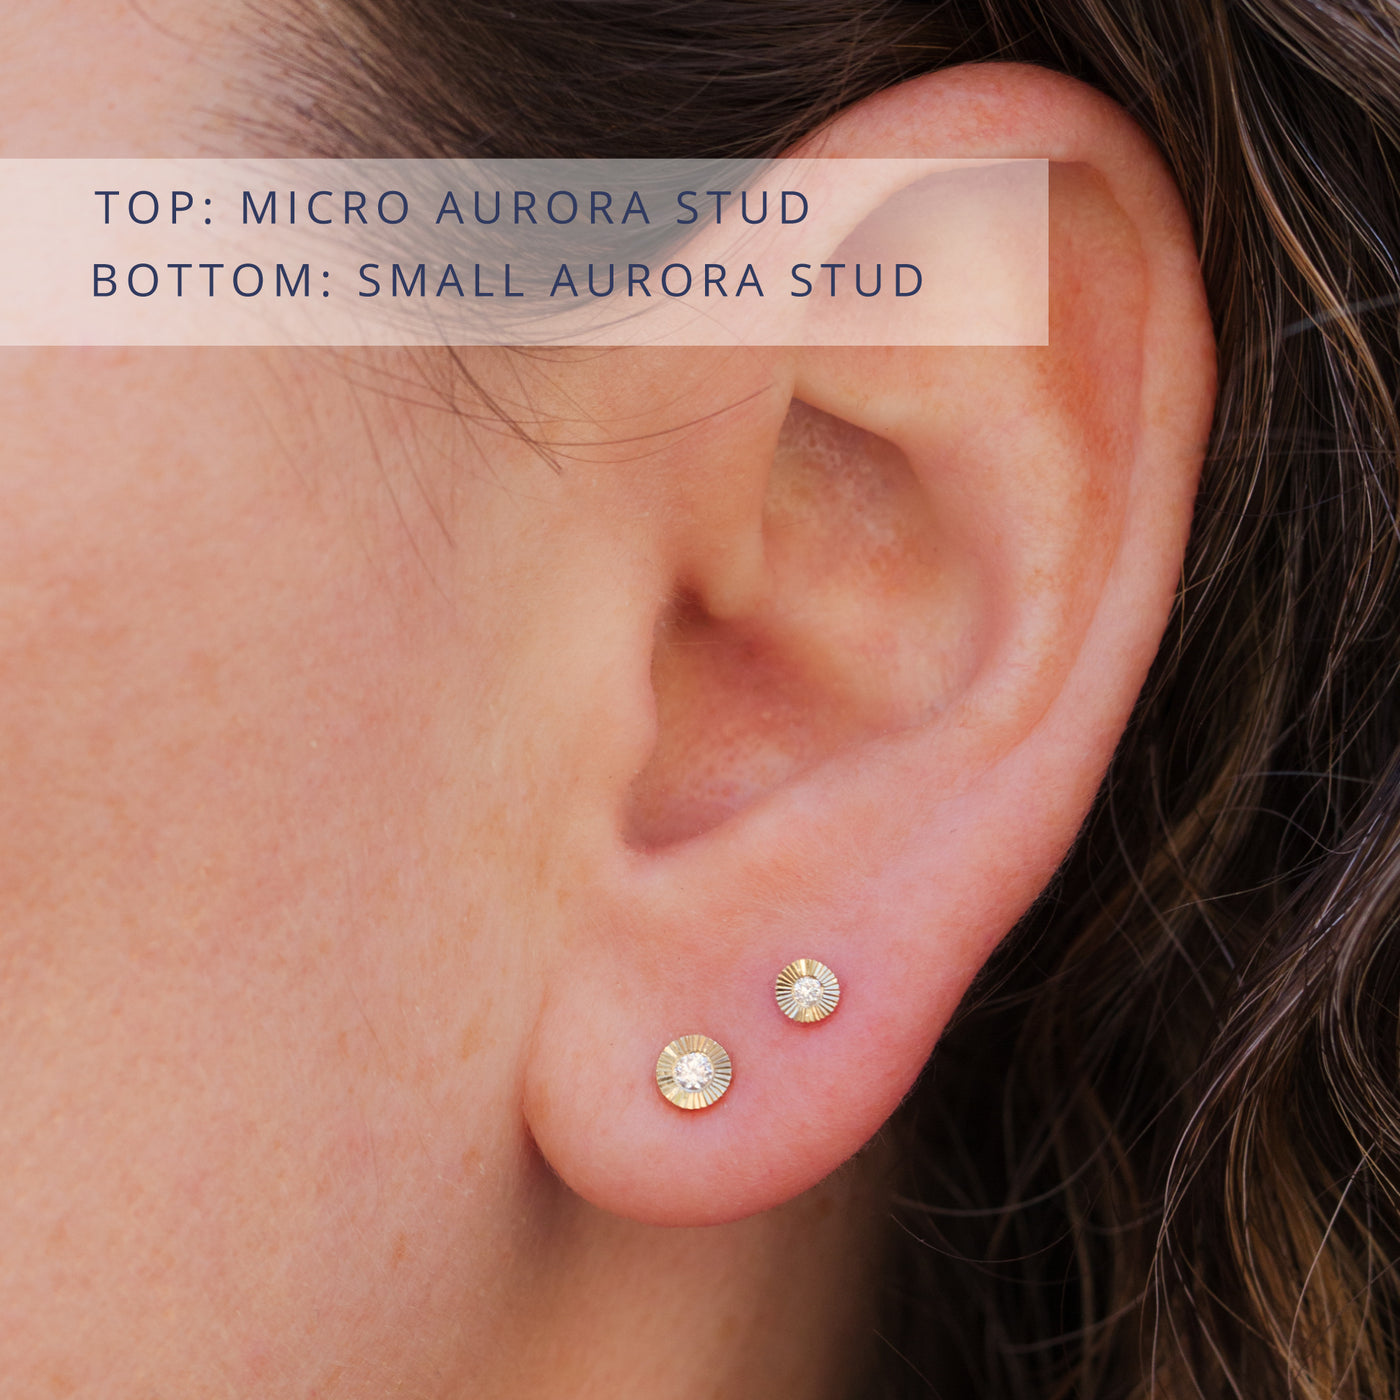 Aurora stud earrings on a model's ear. Top: 14k yellow gold micro Aurora diamond studs, bottom: 14k yellow gold Small Aurora diamond studs